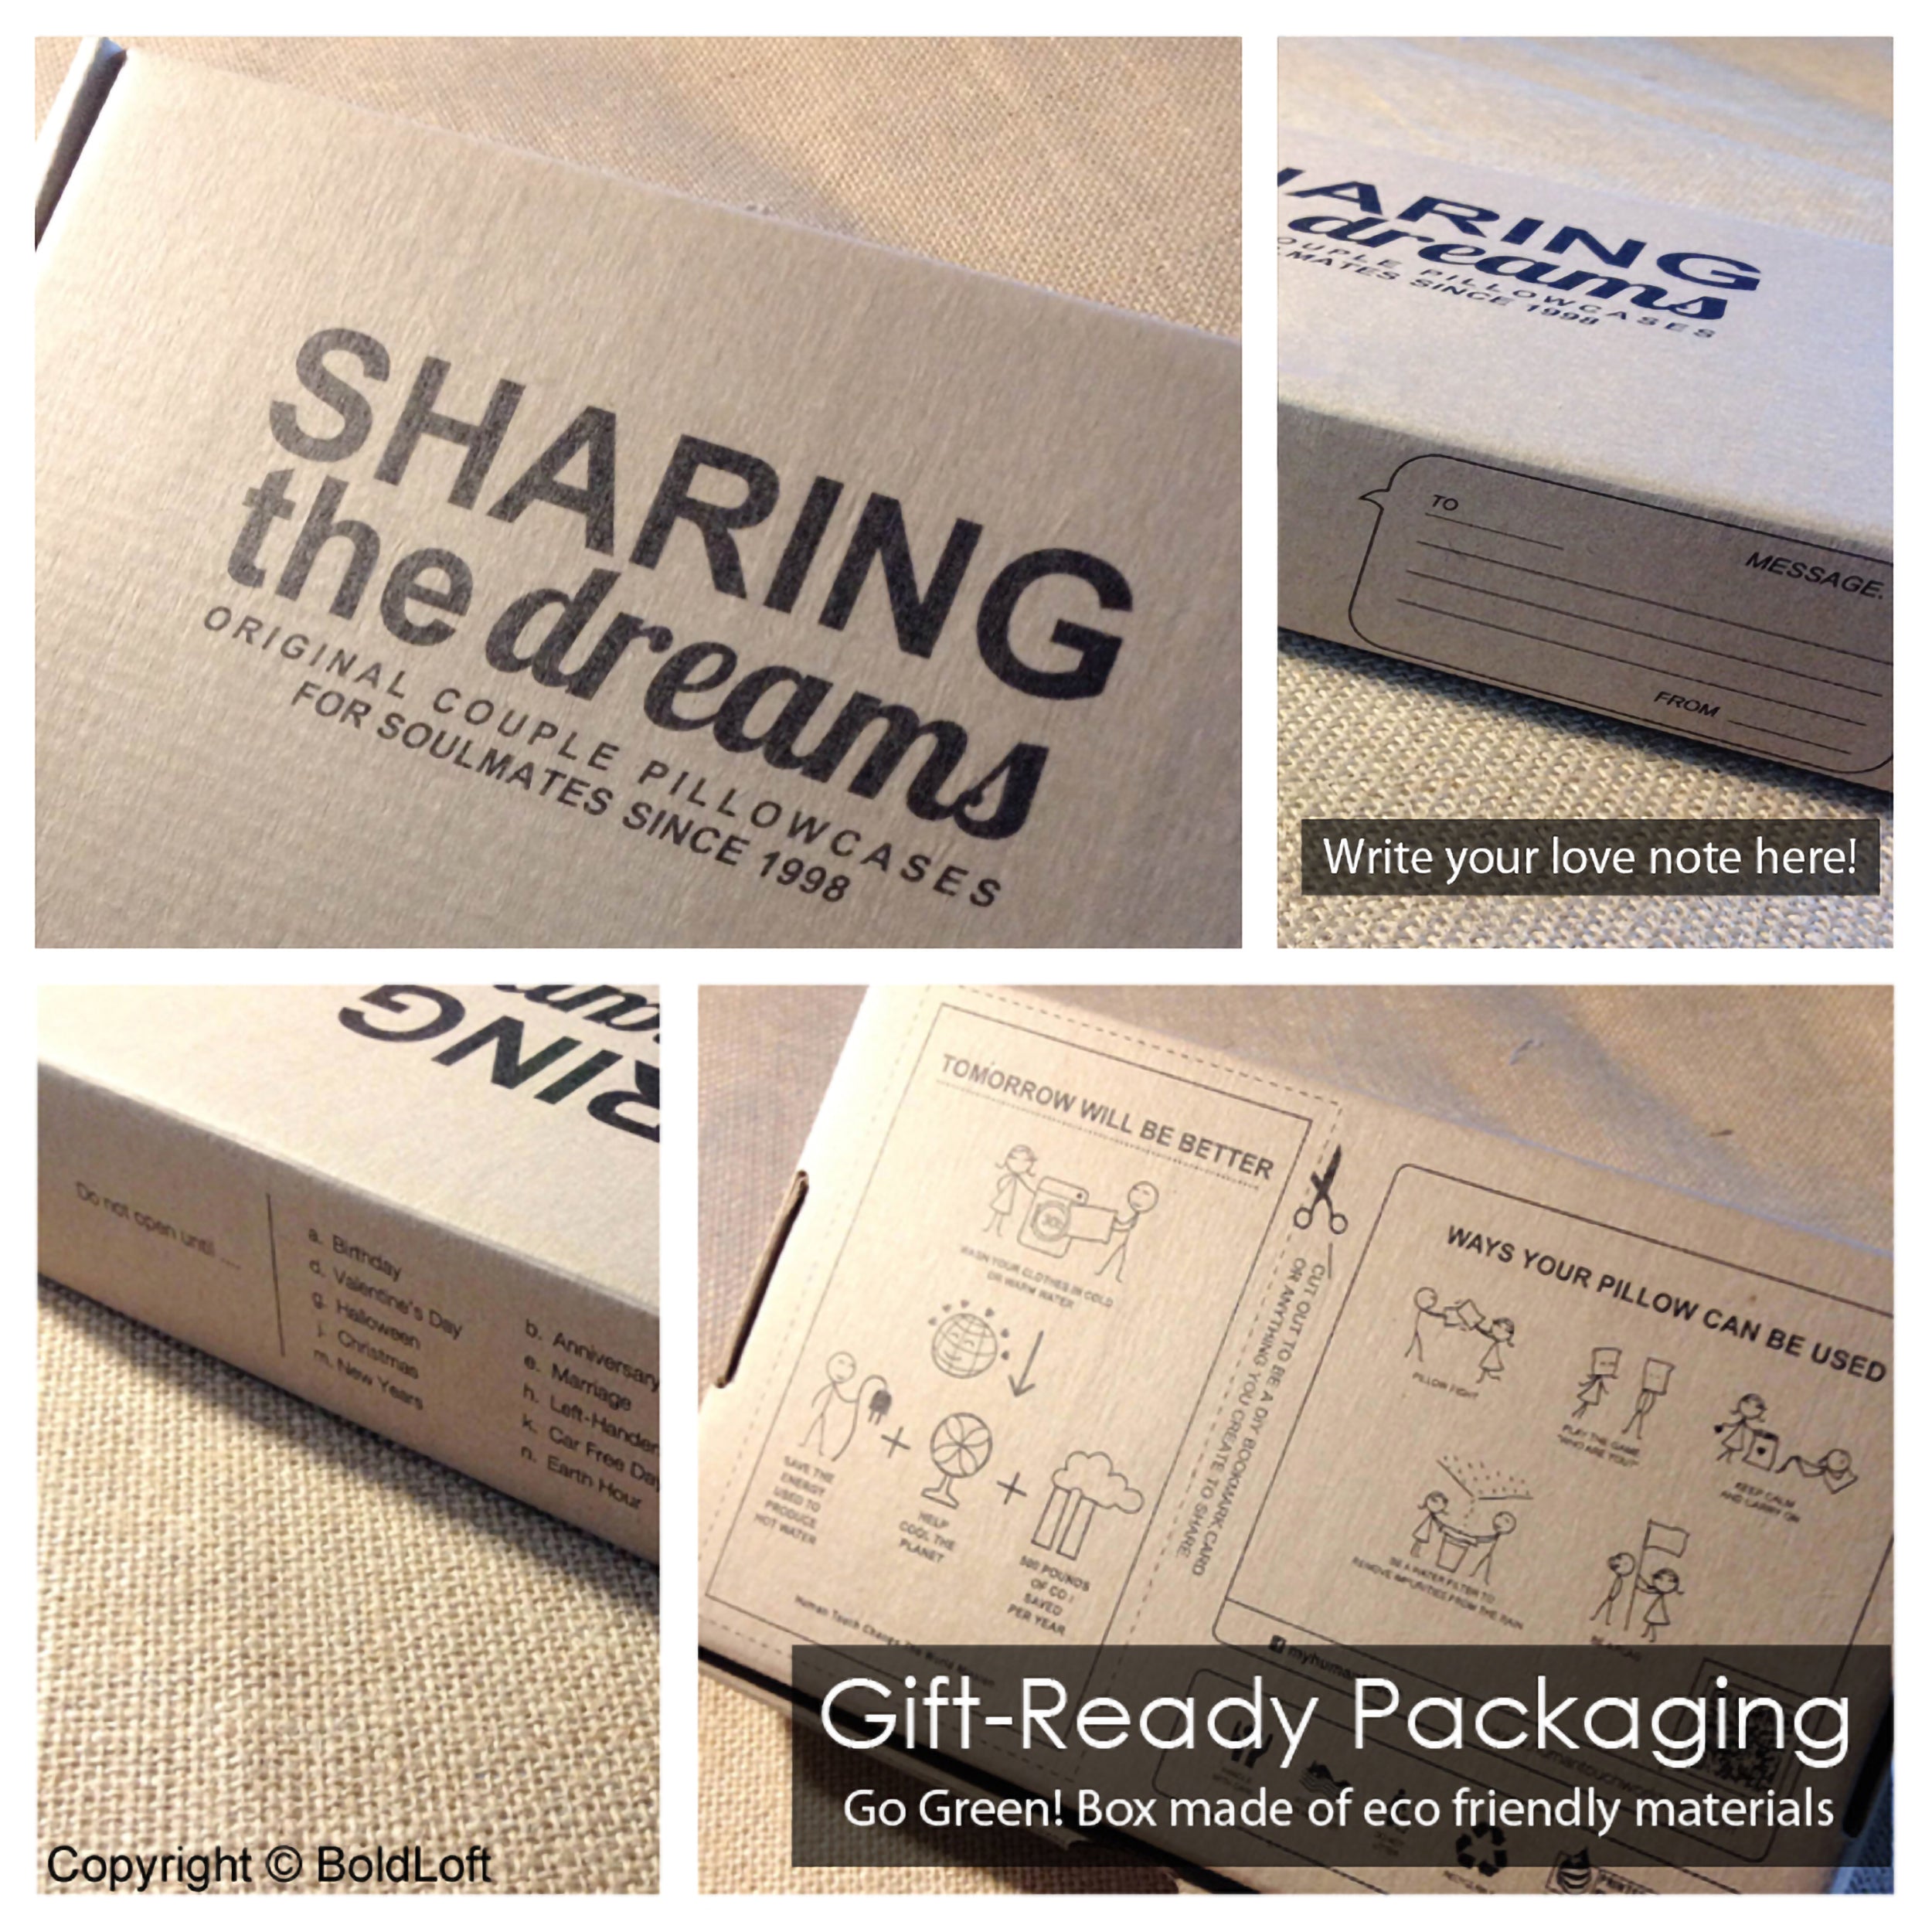 BoldLoft gift-giving ready packaging box for pillowcases